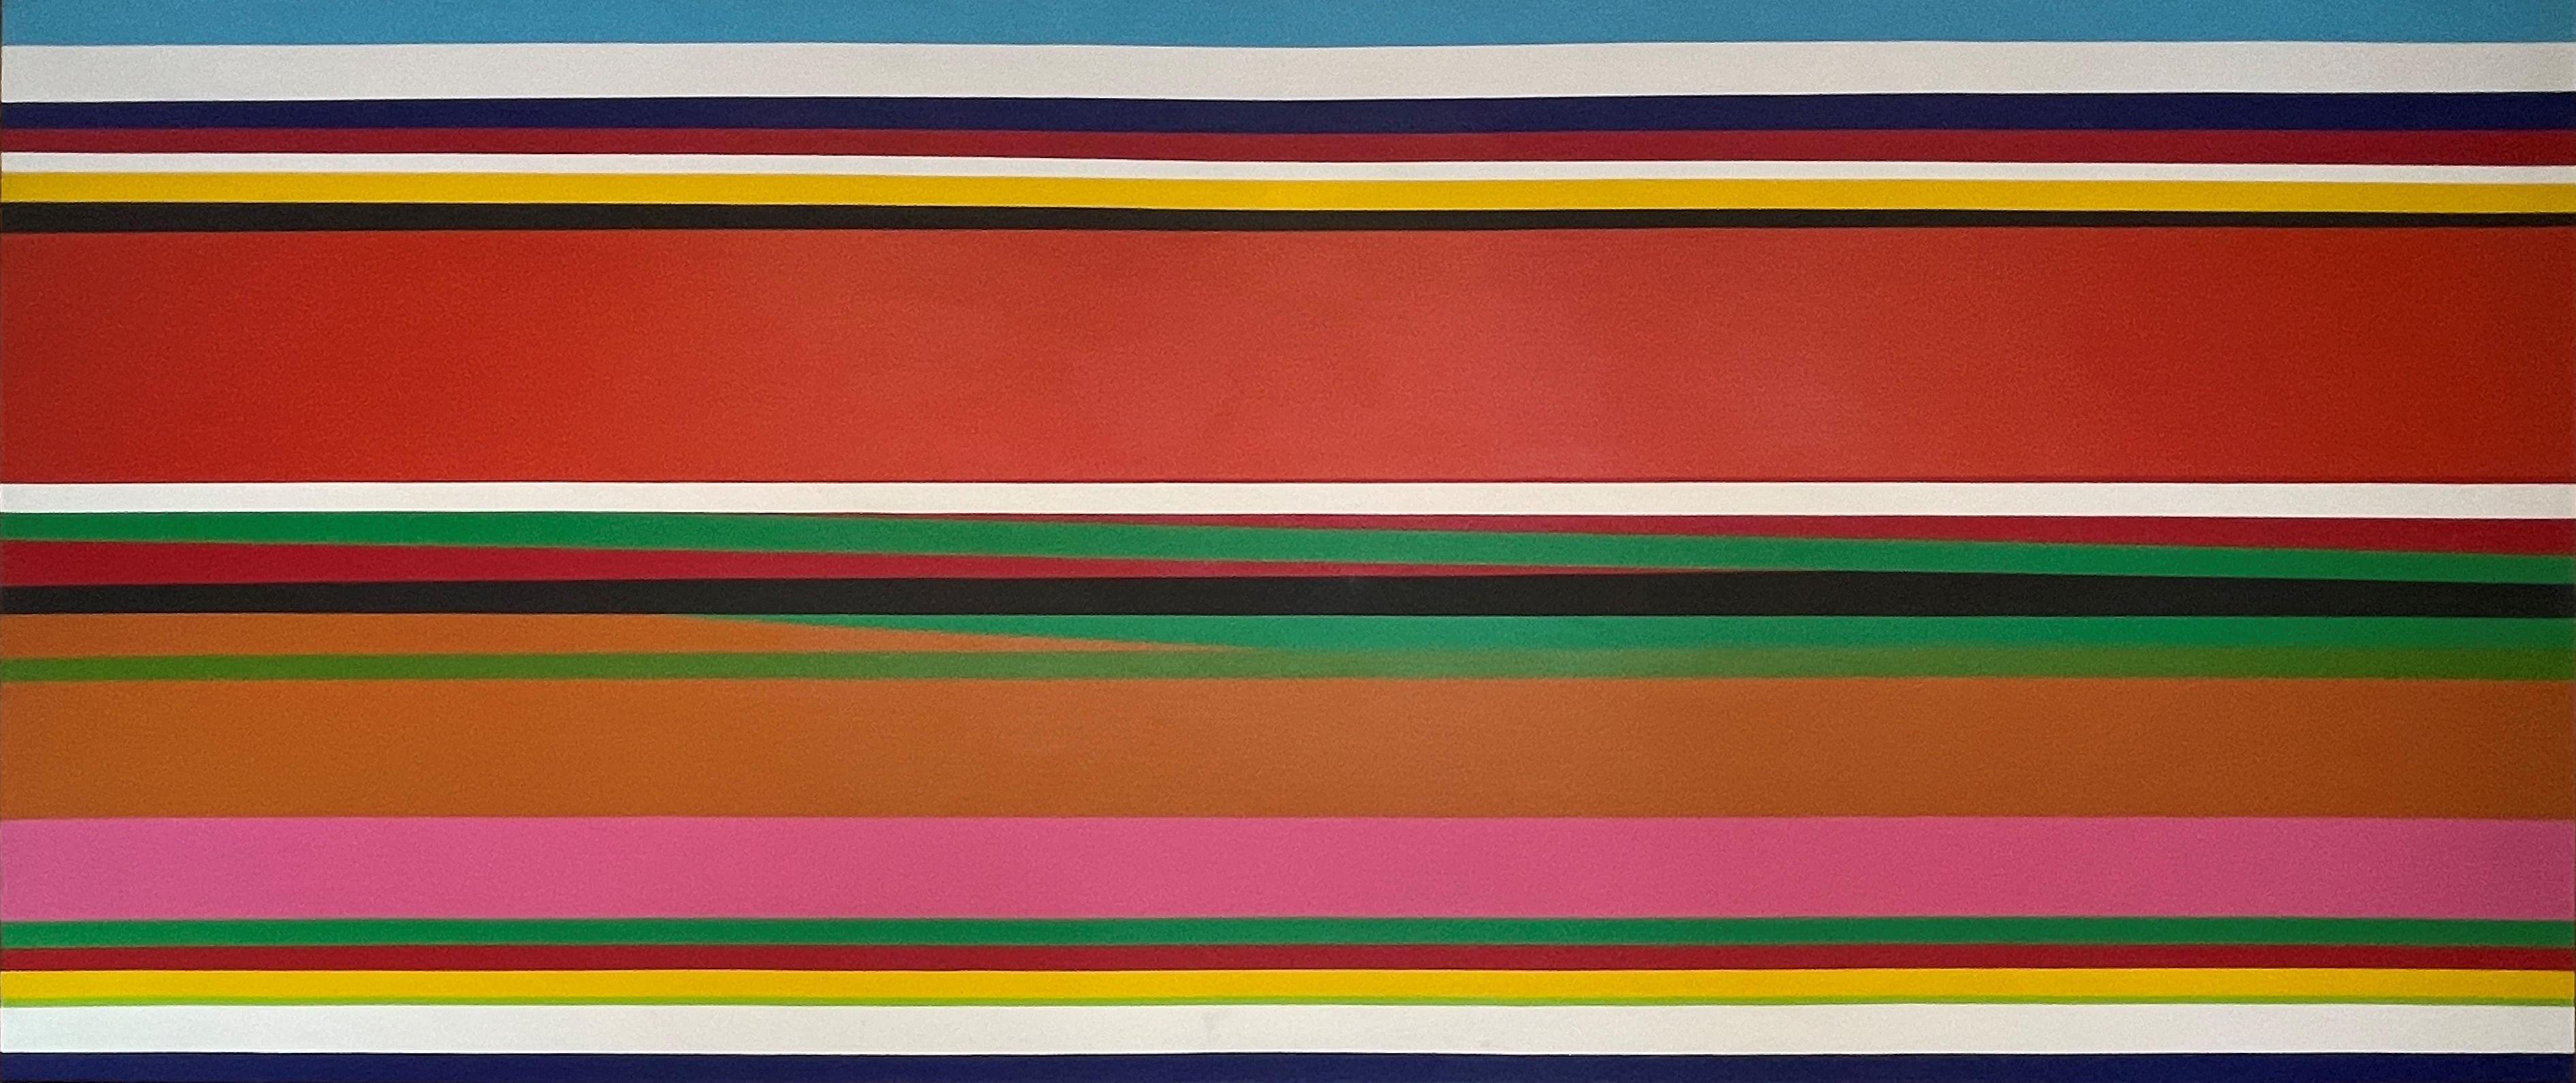 Jay Rosenblum: „Untitled“, farbenfrohes Farbfeld mit Hartkante, farbenfrohe horizontale Streifen